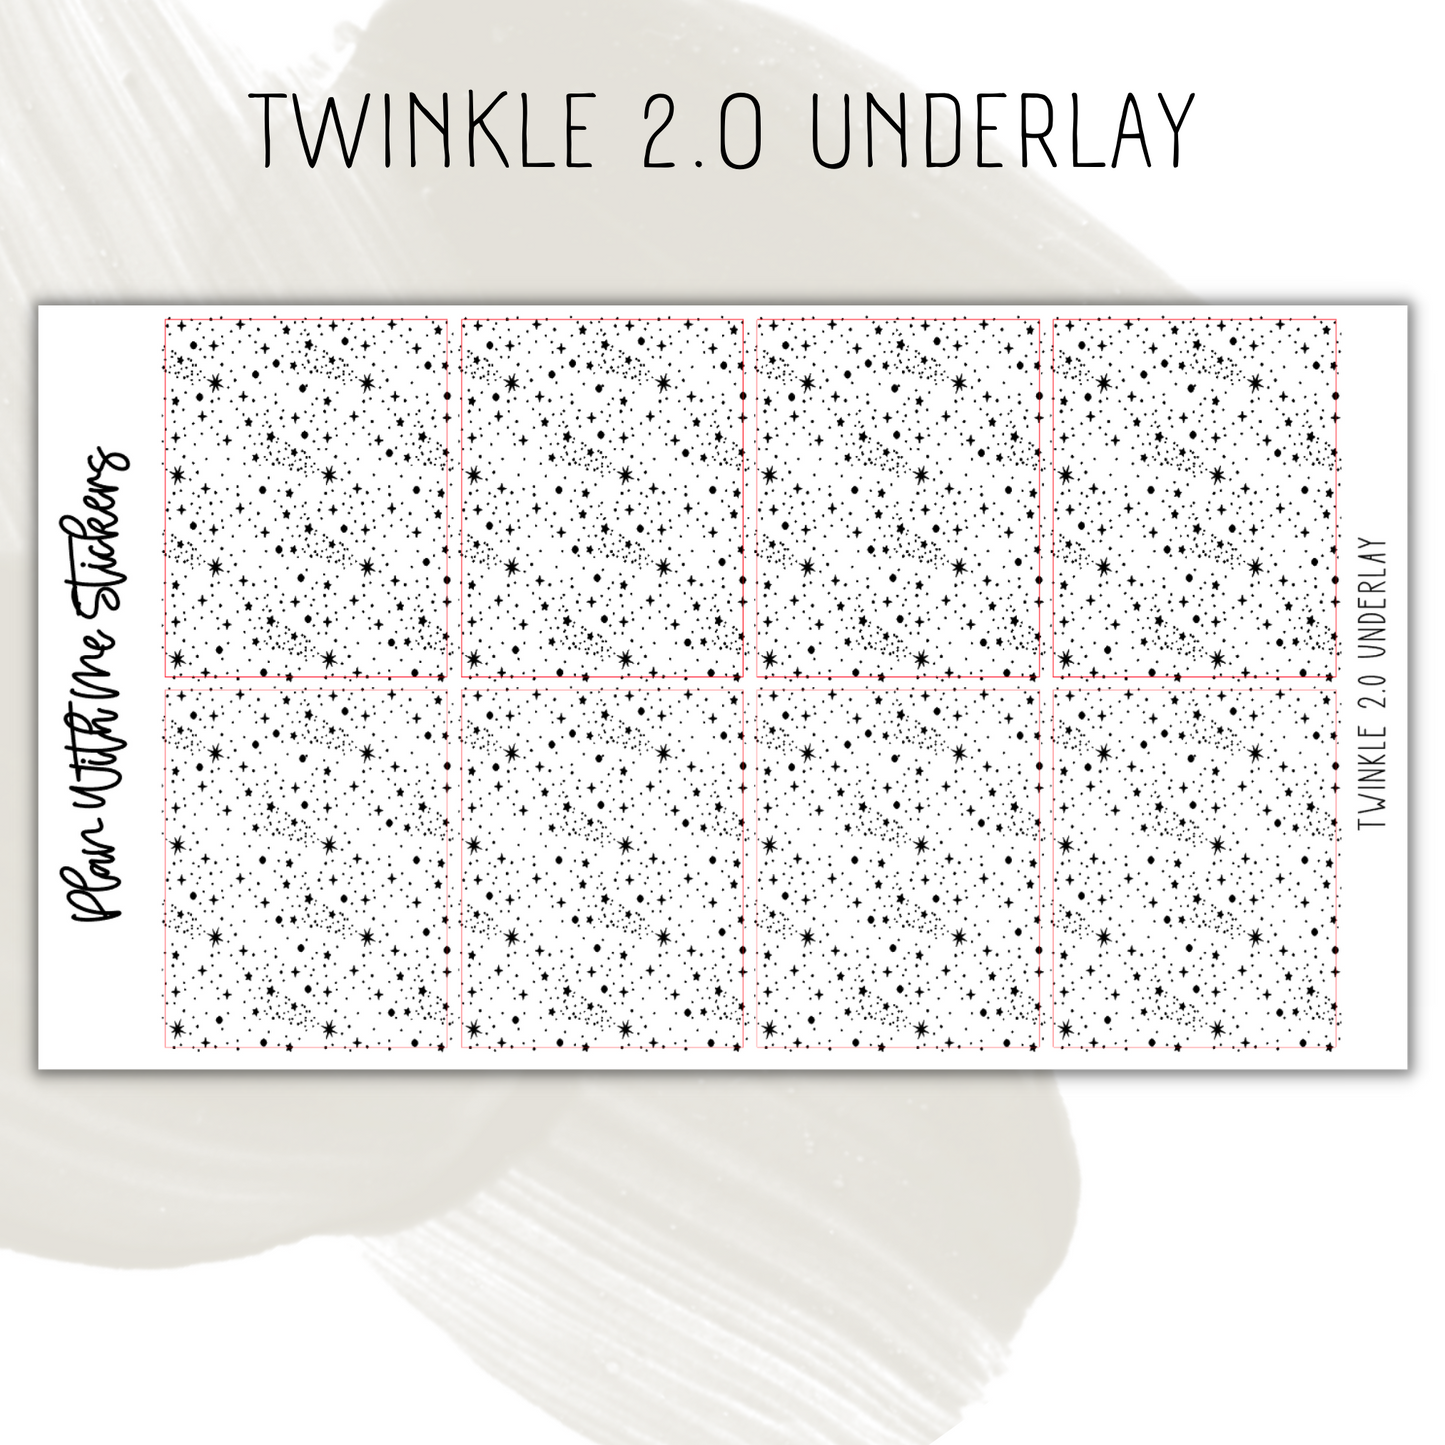 Twinkle 2.0 Underlay